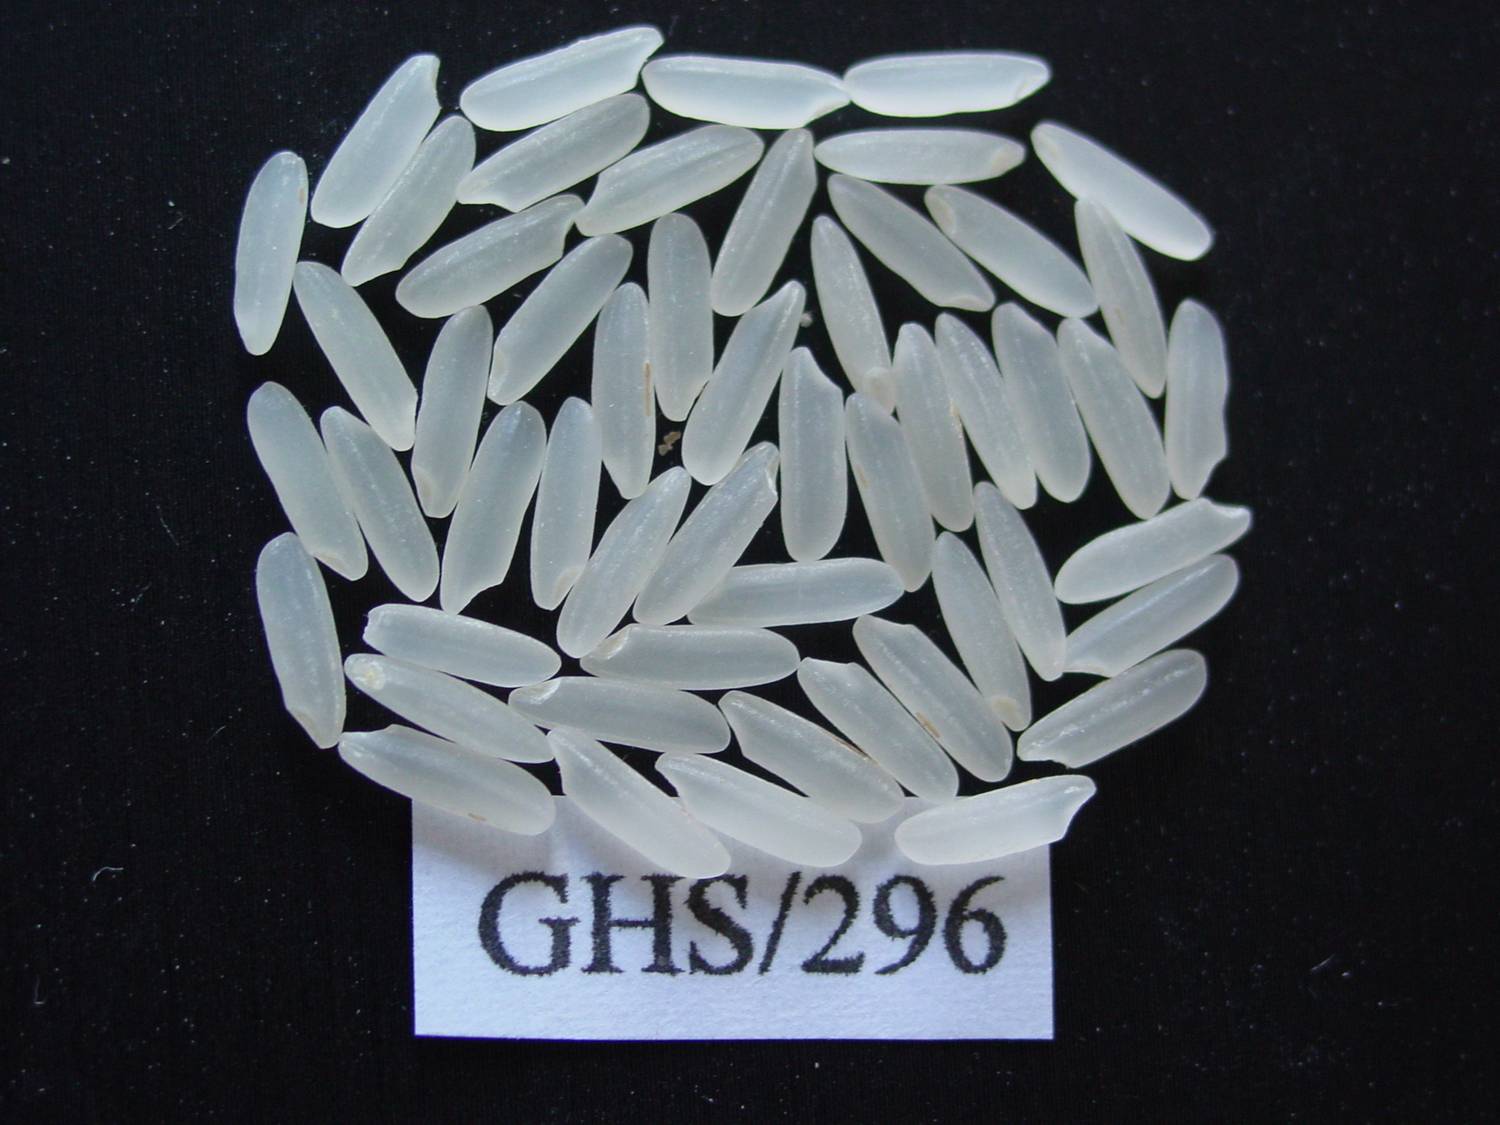 “GHS/296”米質可與高檔泰國米媲美